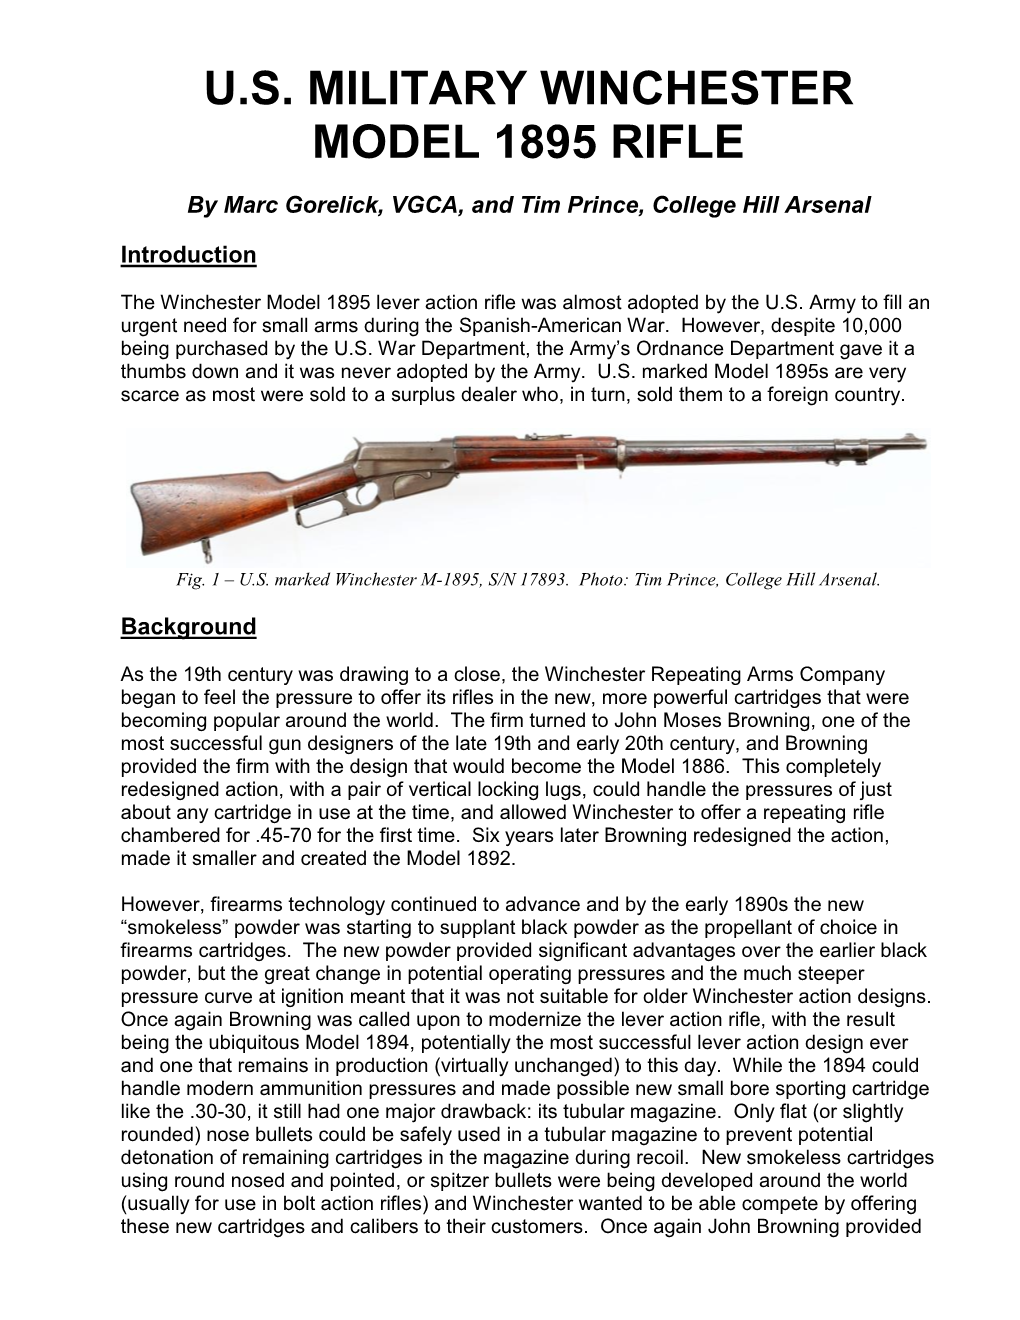 U.S. Military Winchester Model 1895 Rifle